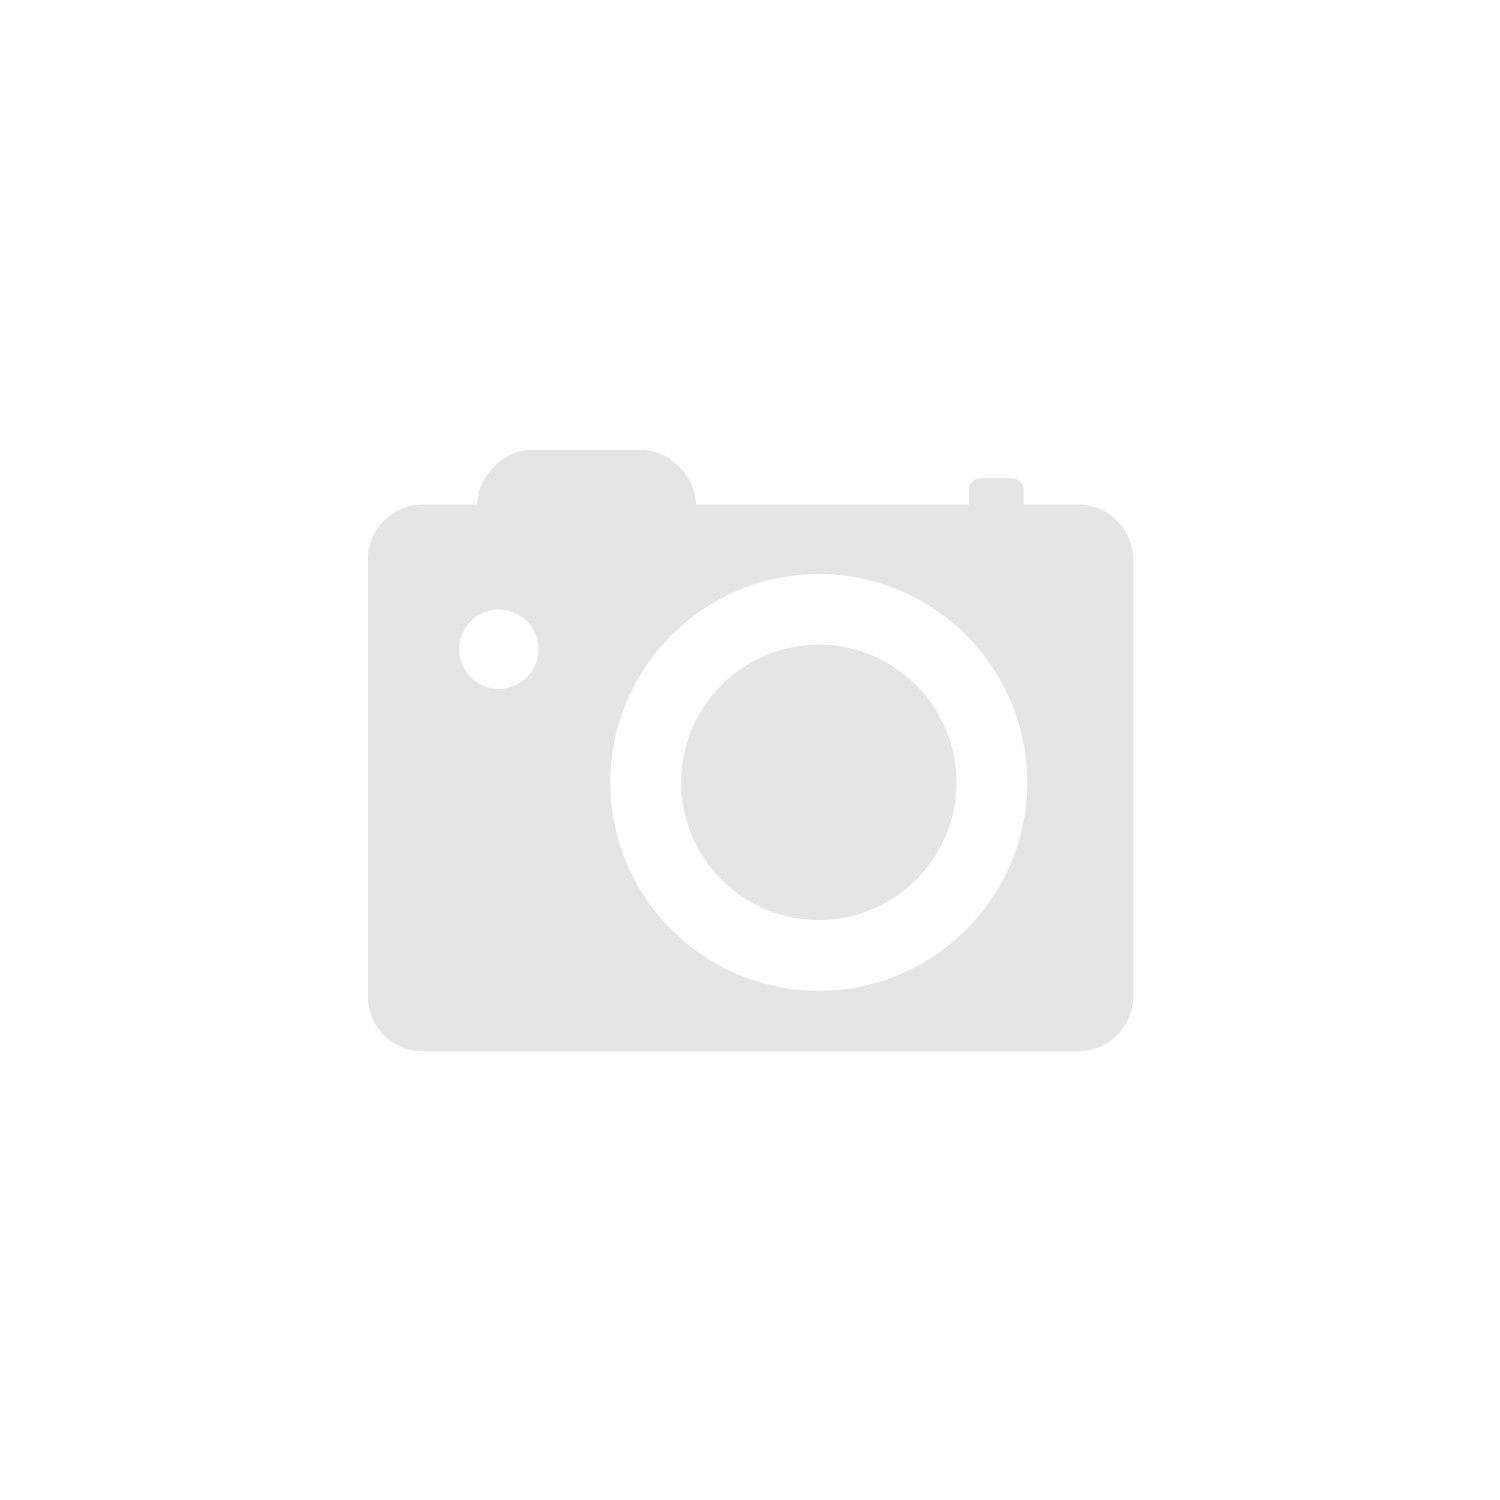 Lacoste Pour Femme Set (EdT 100ml) 50ml bei € + Preisvergleich | BL ab 49,20